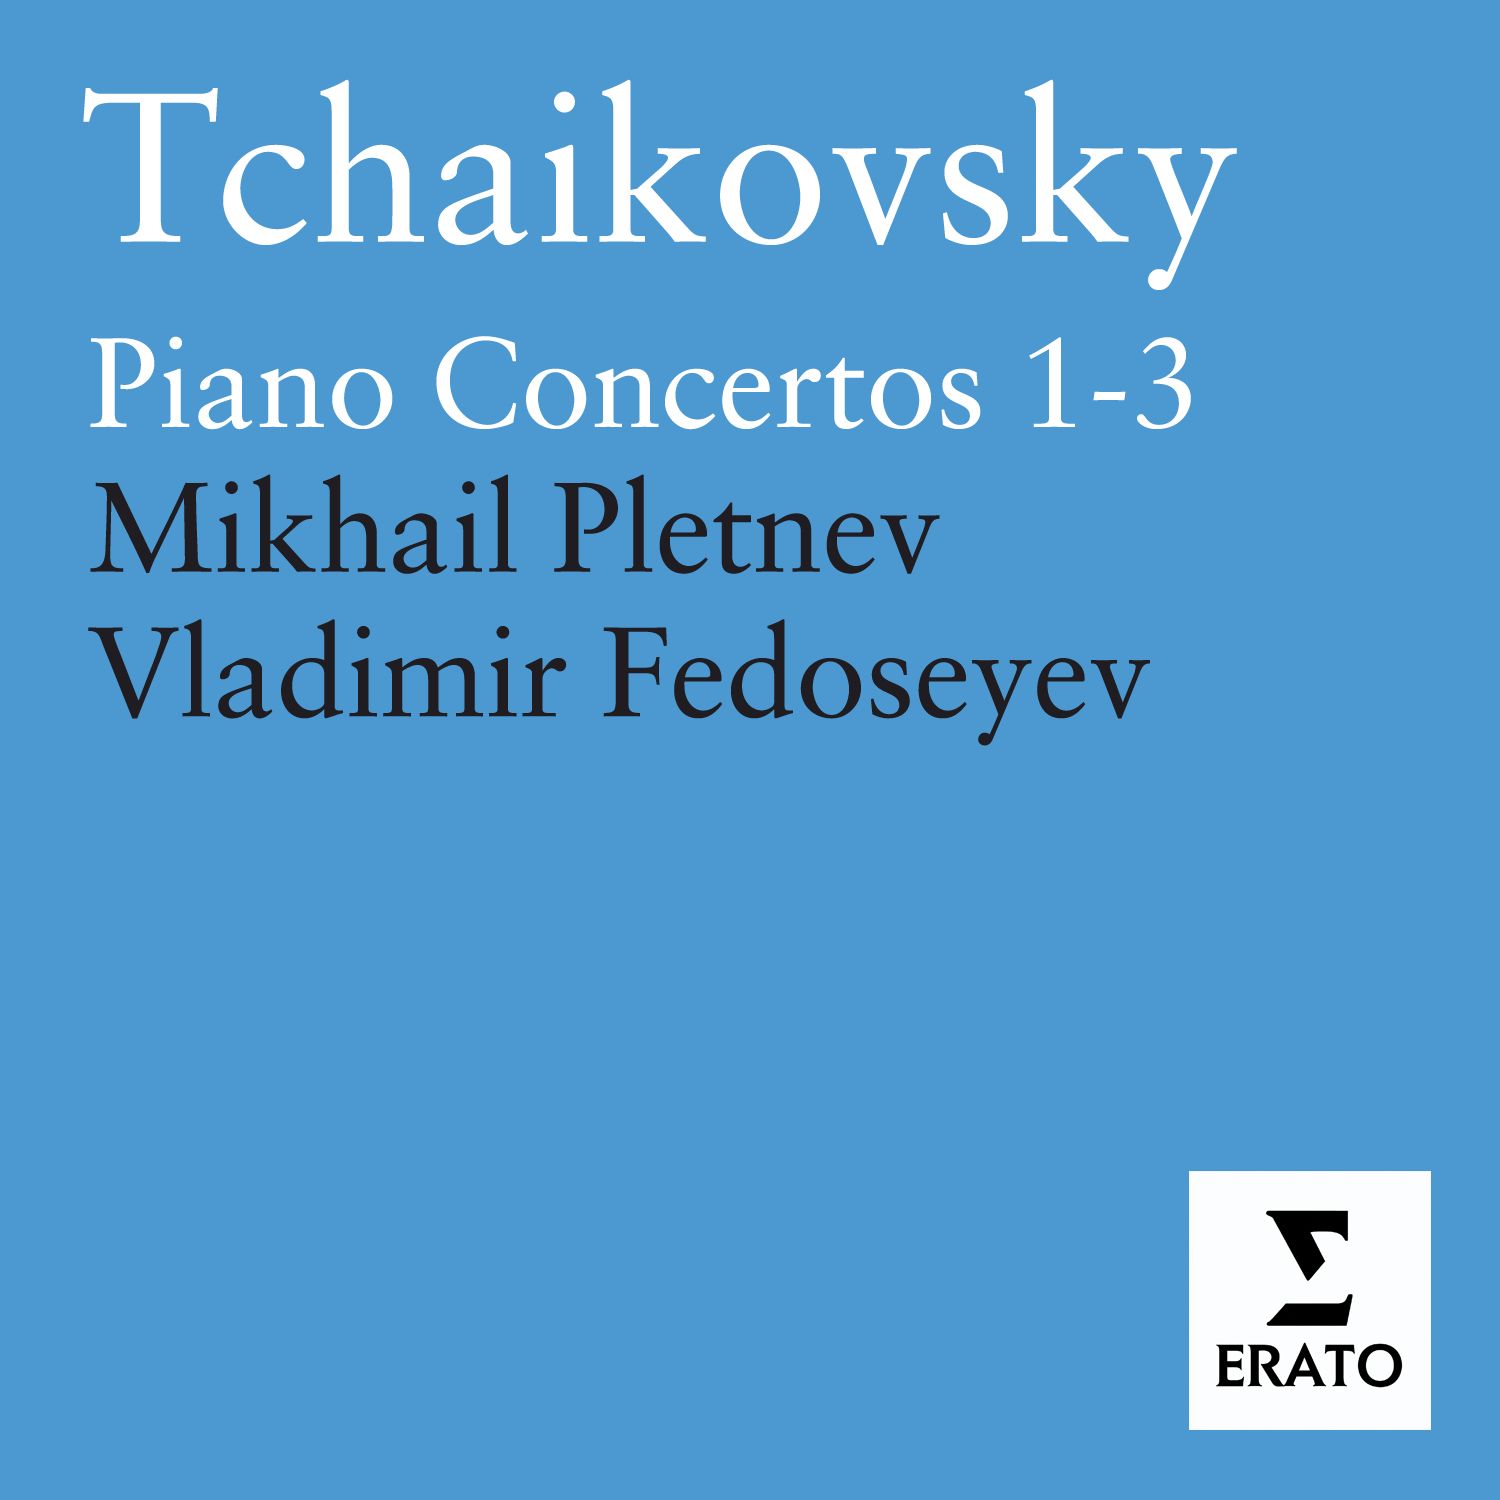 Piano Concerto No. 2 in G, Op.44: I. Allegro brillante